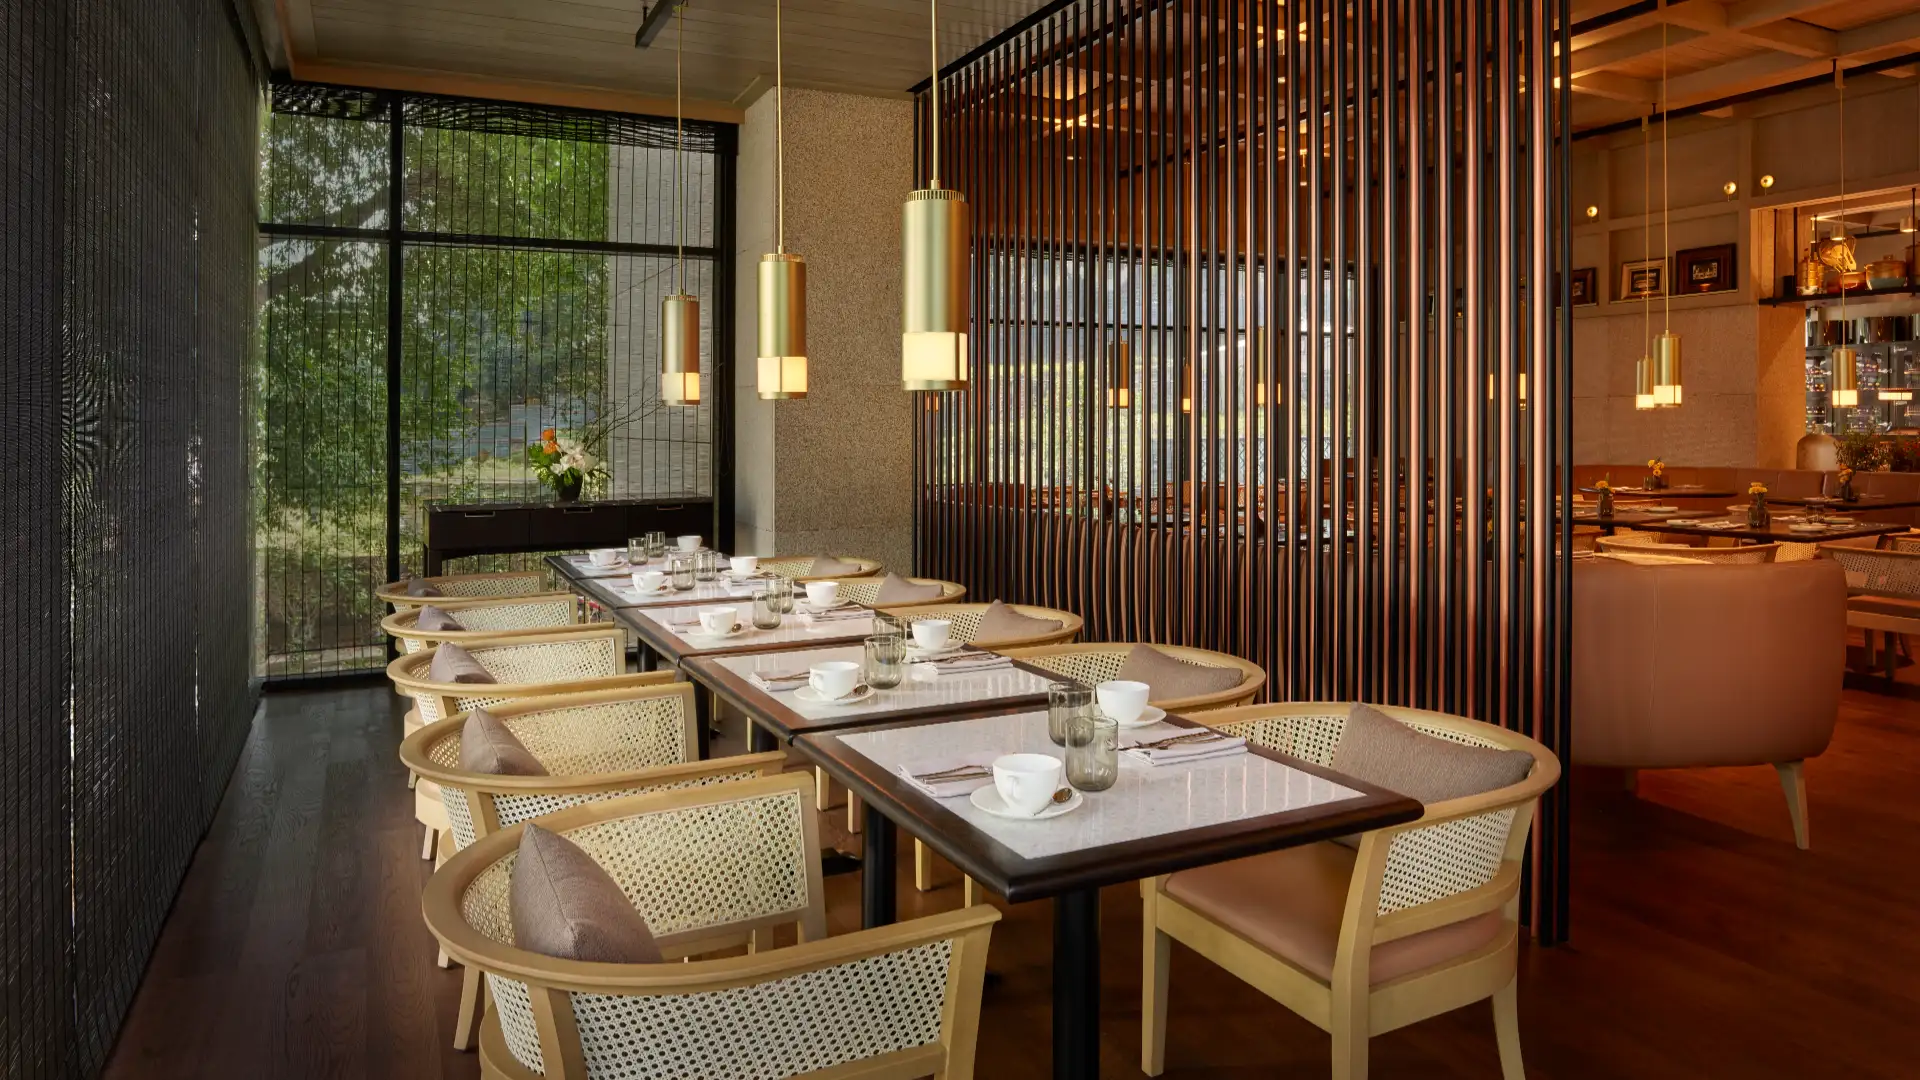 Dining area in ATAS Restaurant at The RuMa Hotel & Residences